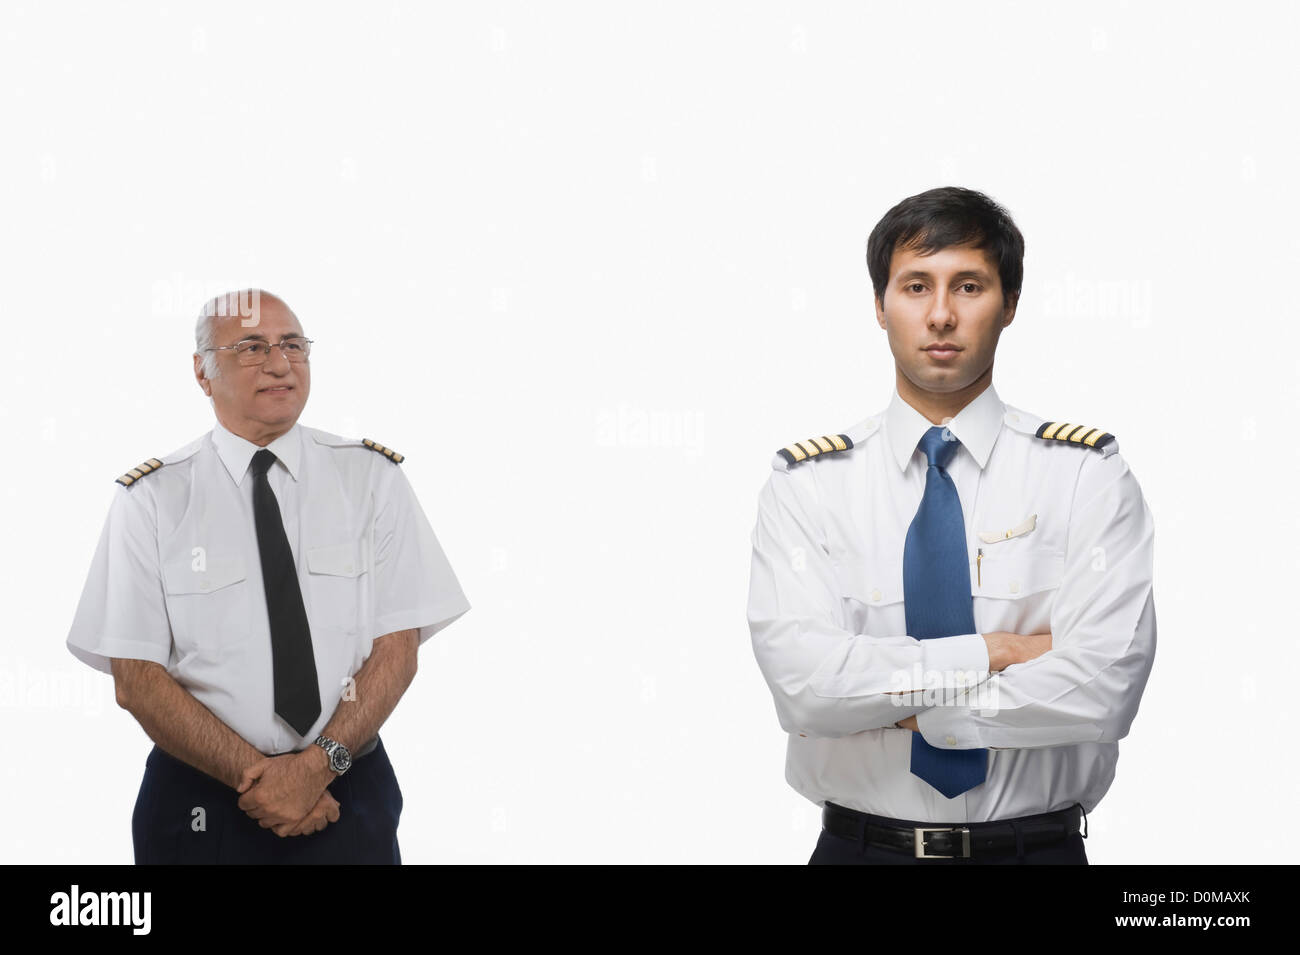 Dos pilotos mostrando diferentes expresiones faciales Foto de stock